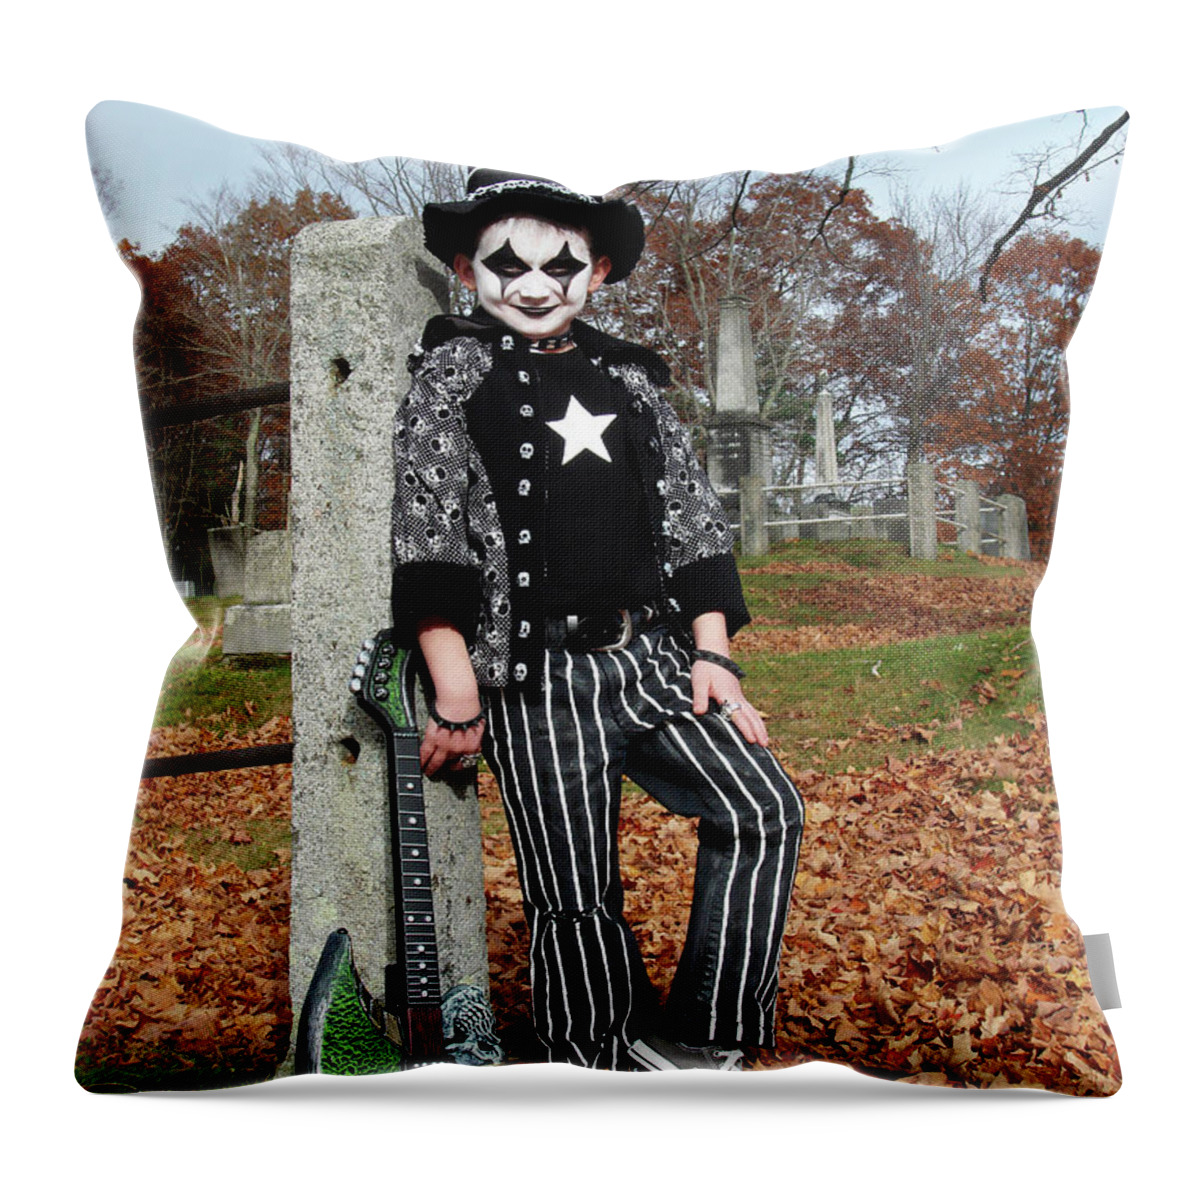 Halloween Throw Pillow featuring the photograph Rotten Rocker Costume 5 by Amy E Fraser